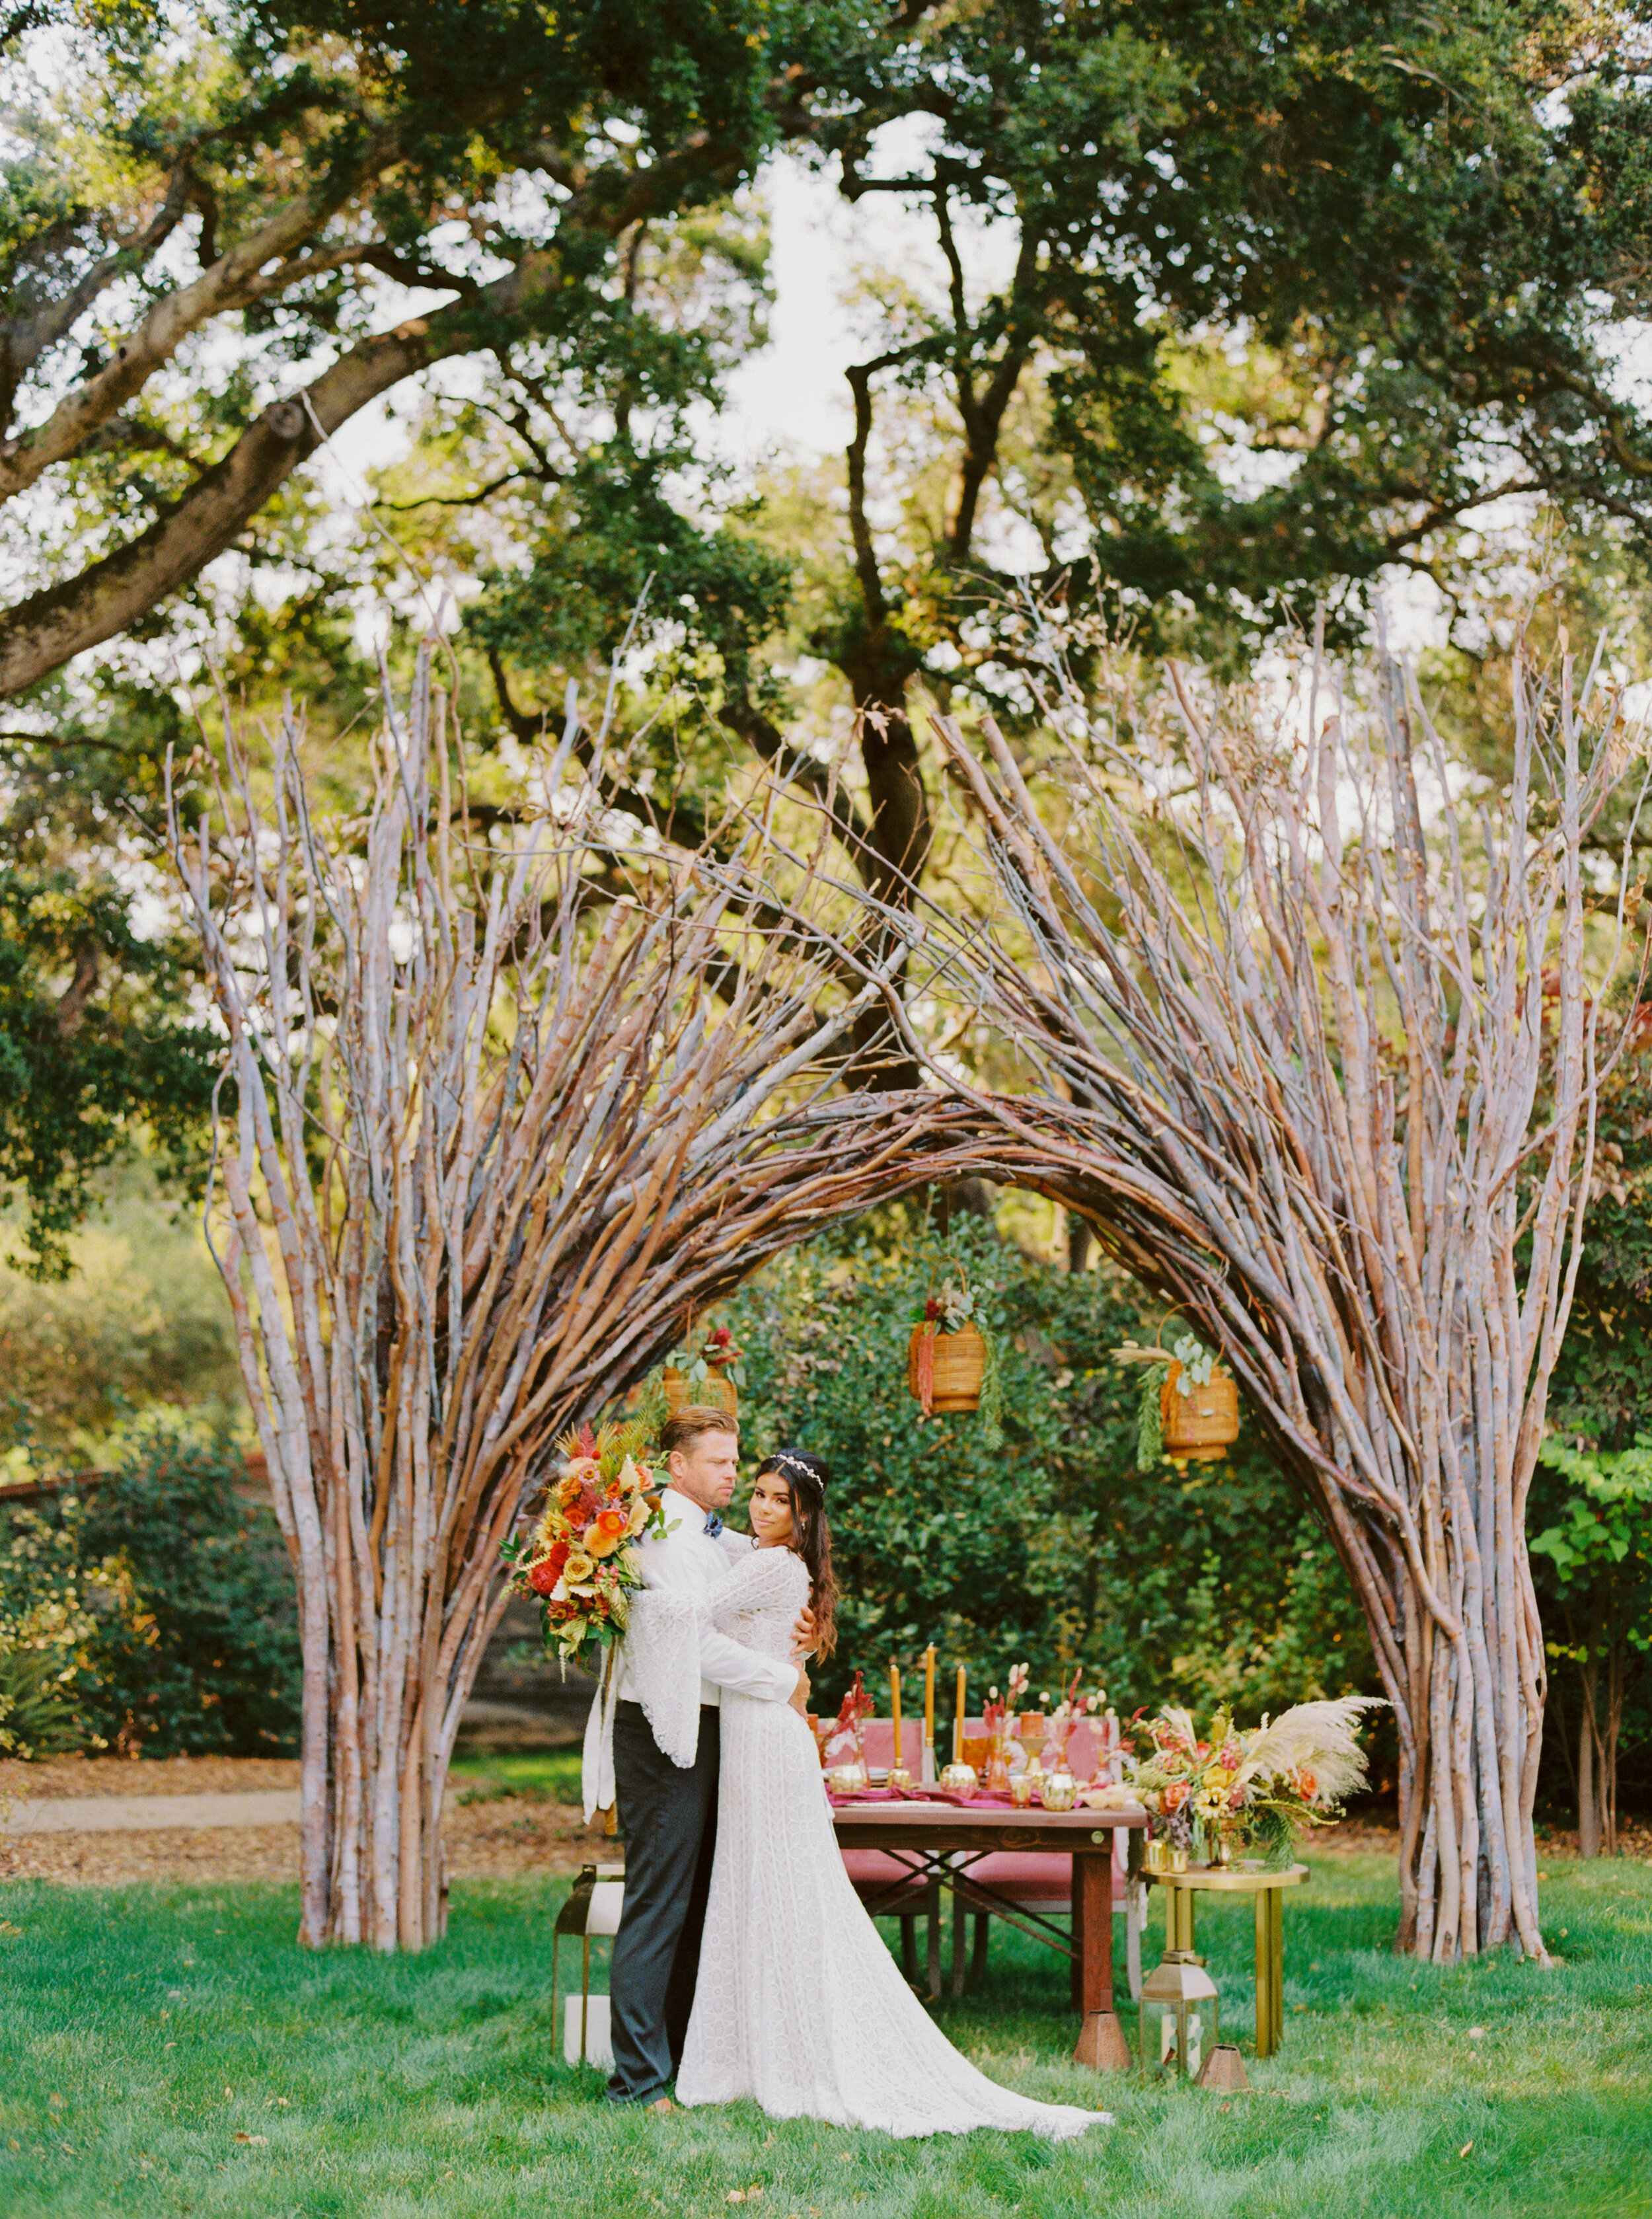 Sarahi Hadden - An Earthy Summer Boho Inspired Wedding with Sunset Hues at Gardener Ranch-47.jpg